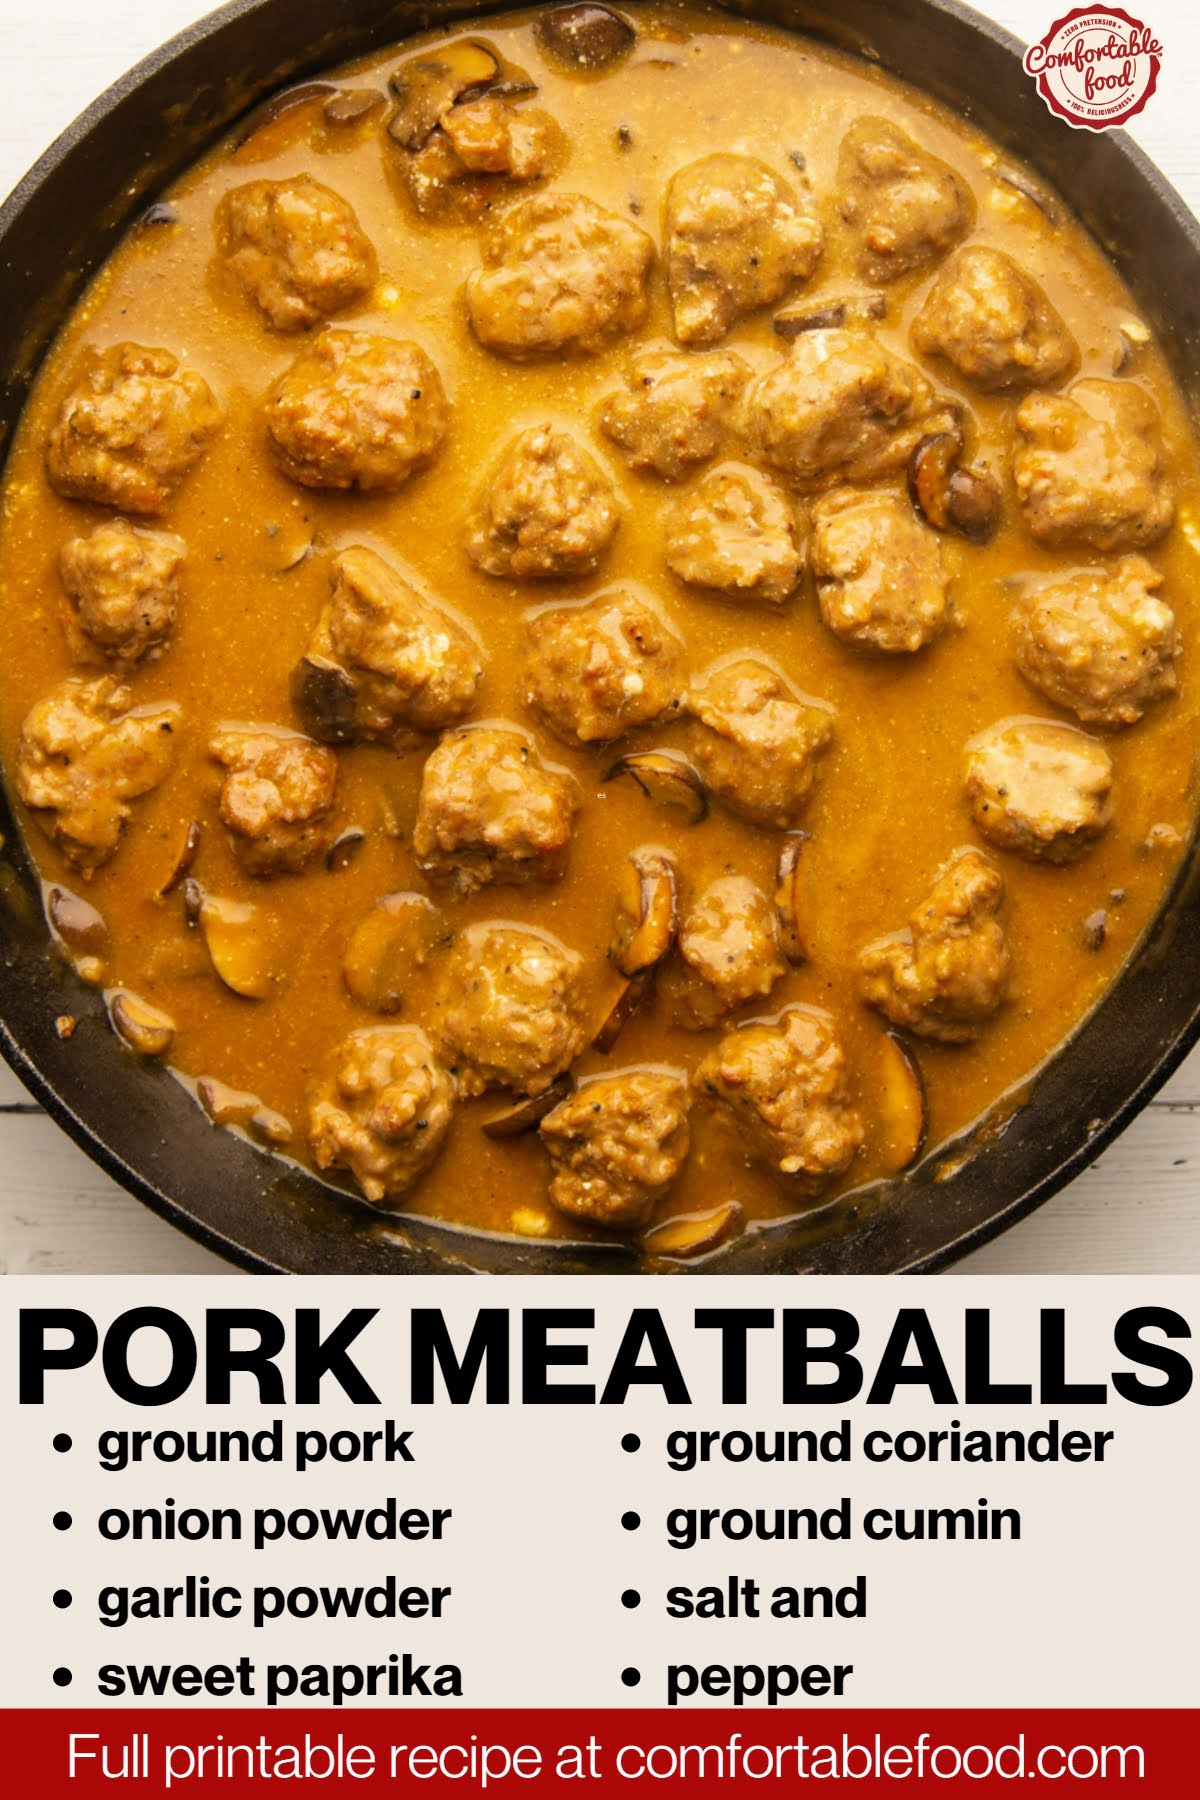 Pork meatballs socials